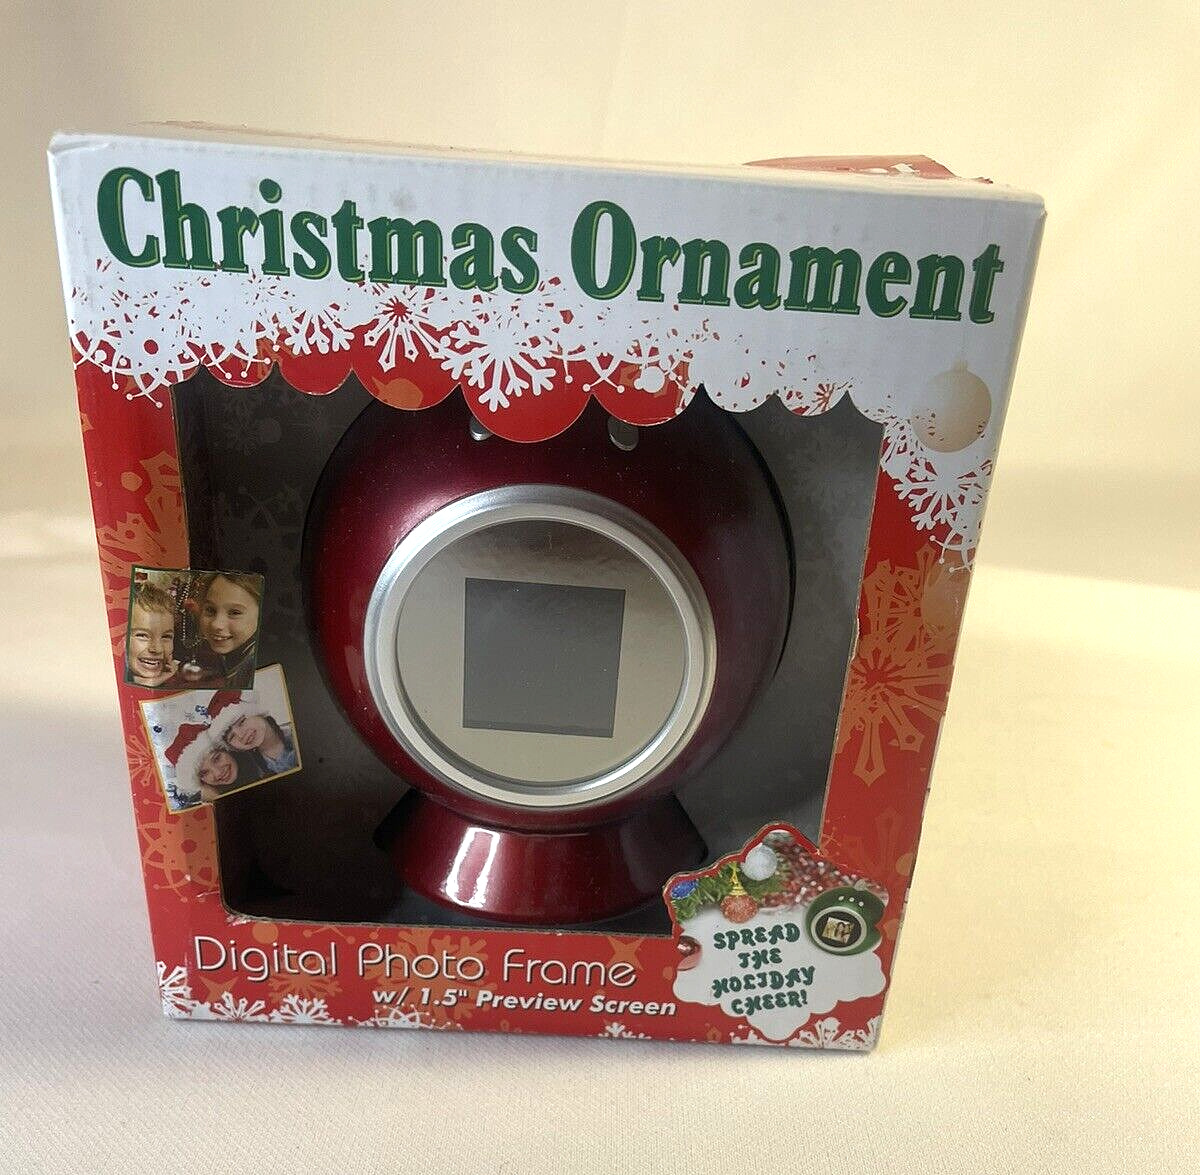 Sakar 14690 1.5-inch Digital Photo Frame (Christmas Ornament, Red)